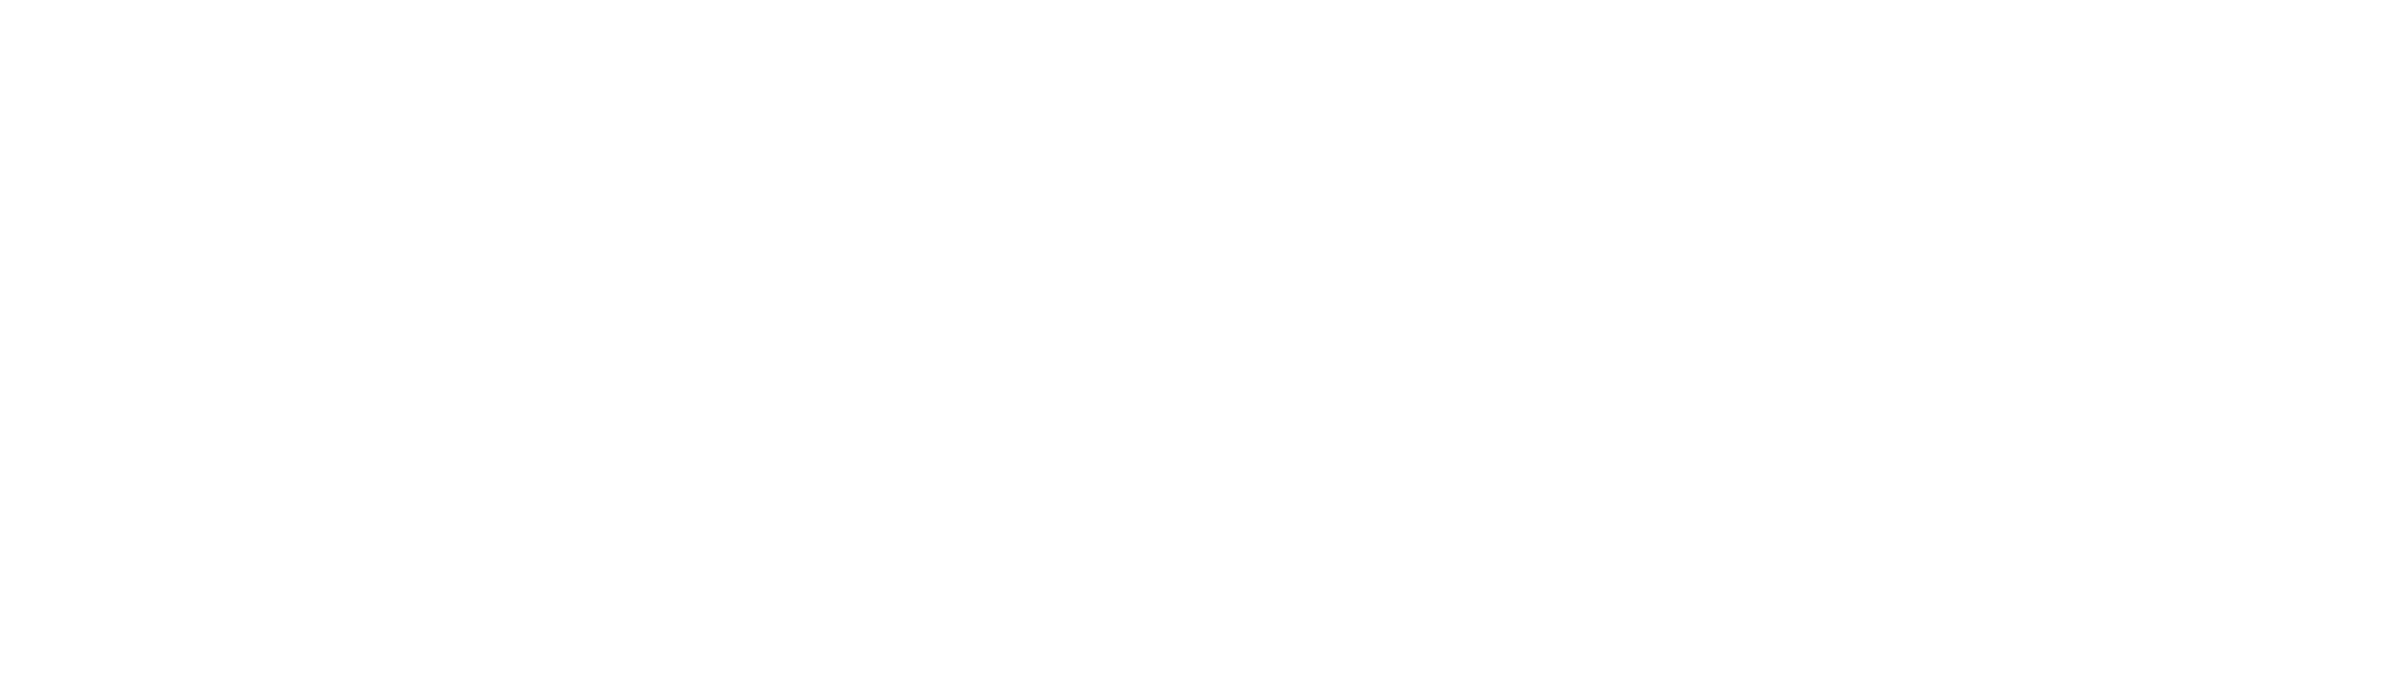 Baxter Logo - Baxter Brewing Co. | Distinctly Maine Craft Brewery